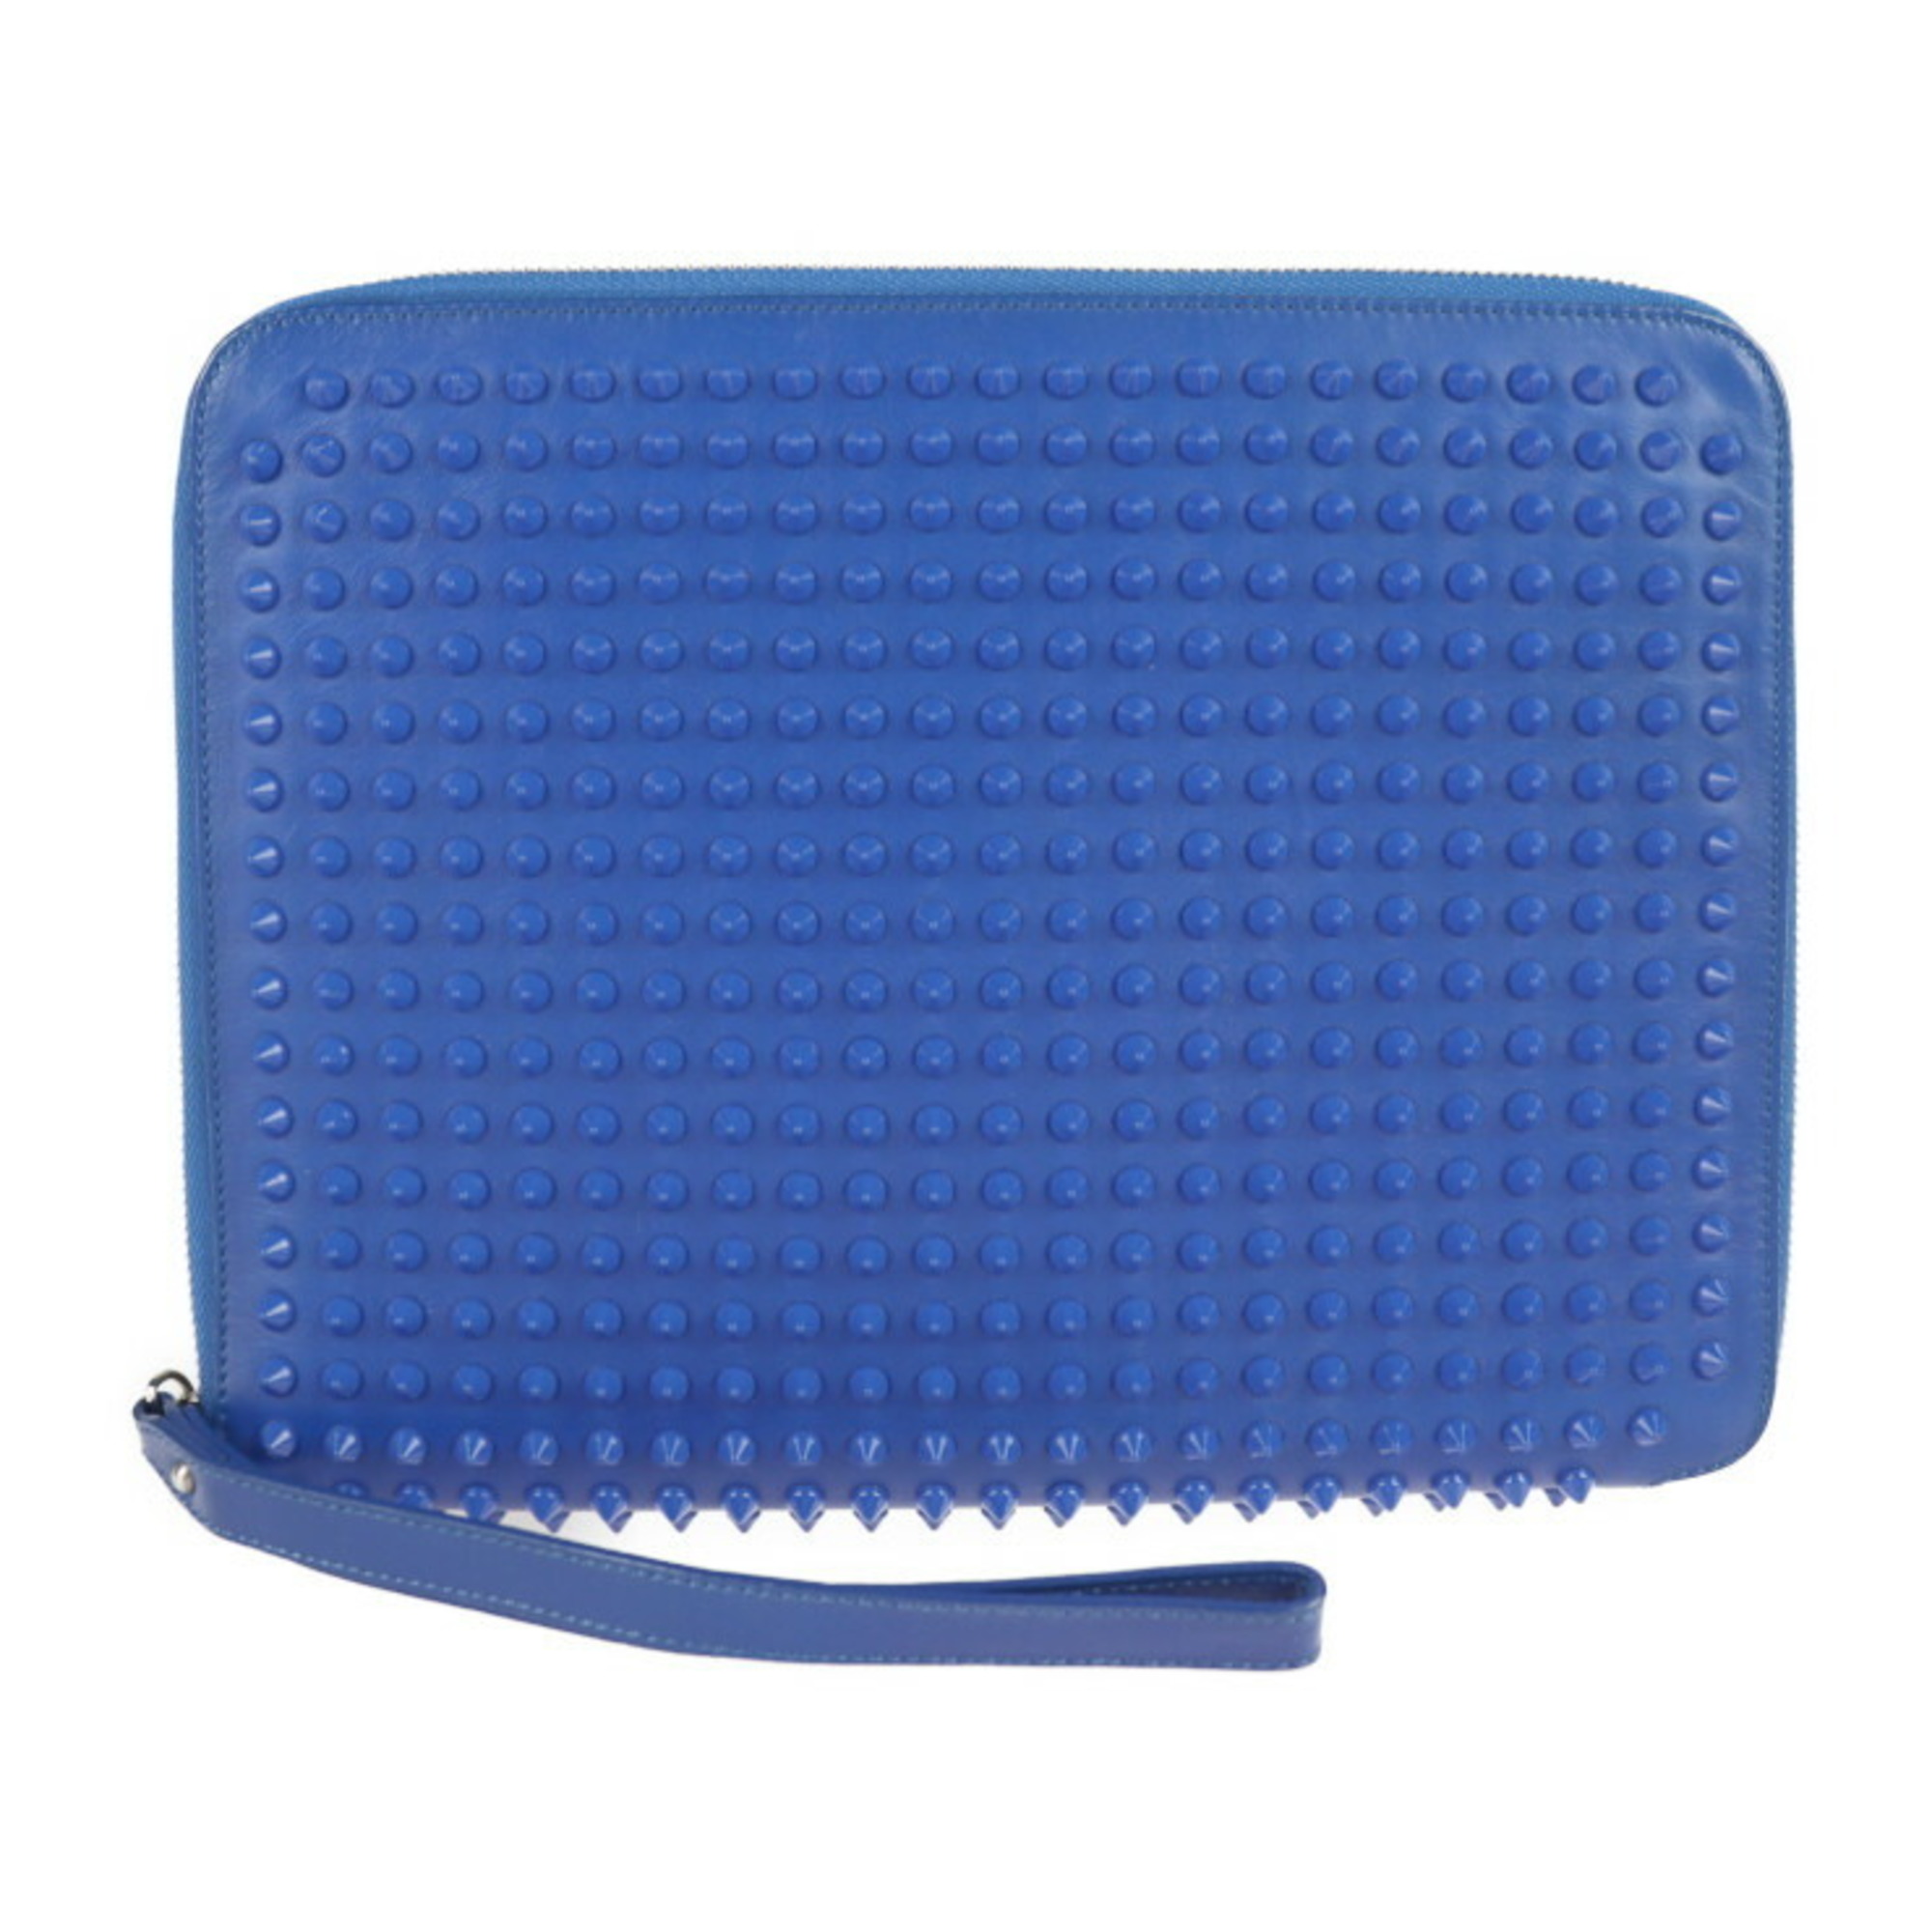 Christian Louboutin iPad Case Second Bag 3120247 Leather Blue Round Zipper Clutch Spike Studs